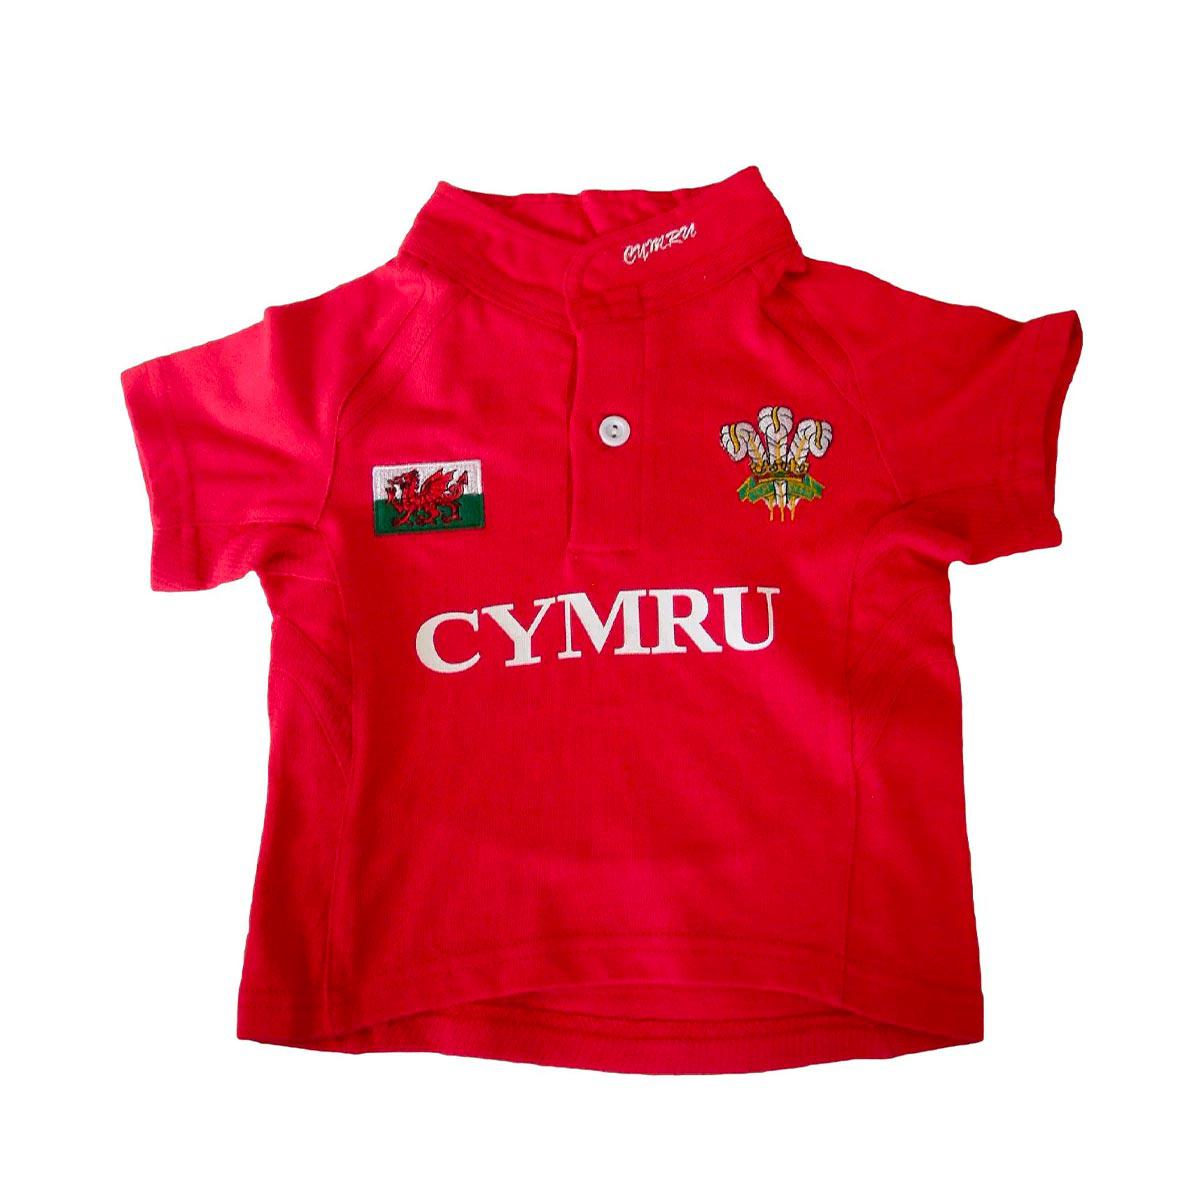 Welsh Rugby Top - Cymru - 100% Cotton - Short Sleeves - Toddler / Child